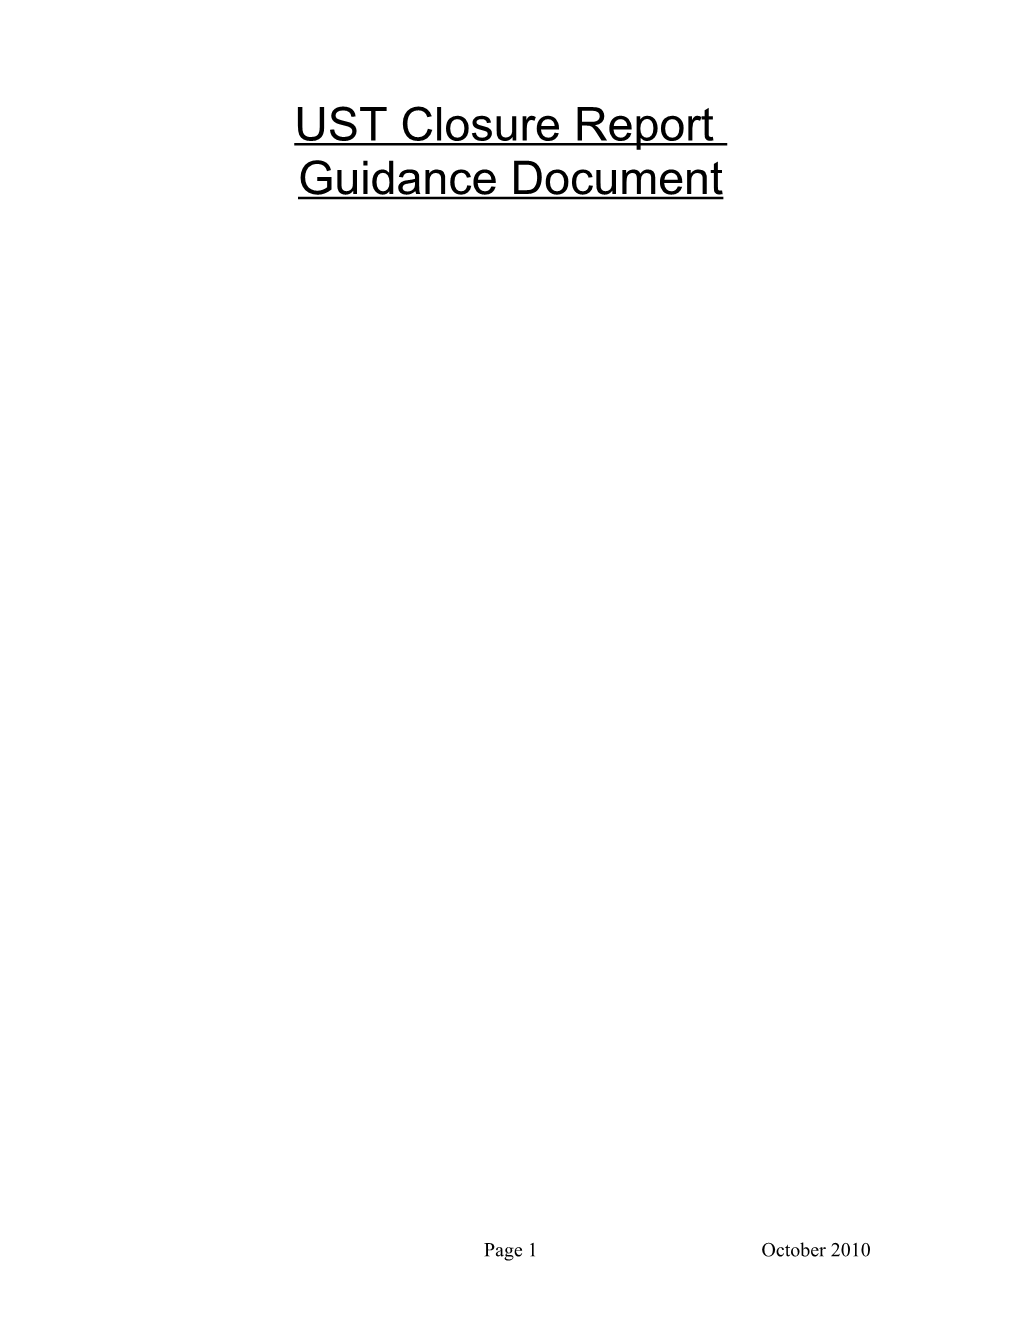 UST Closure Report Guidance Document